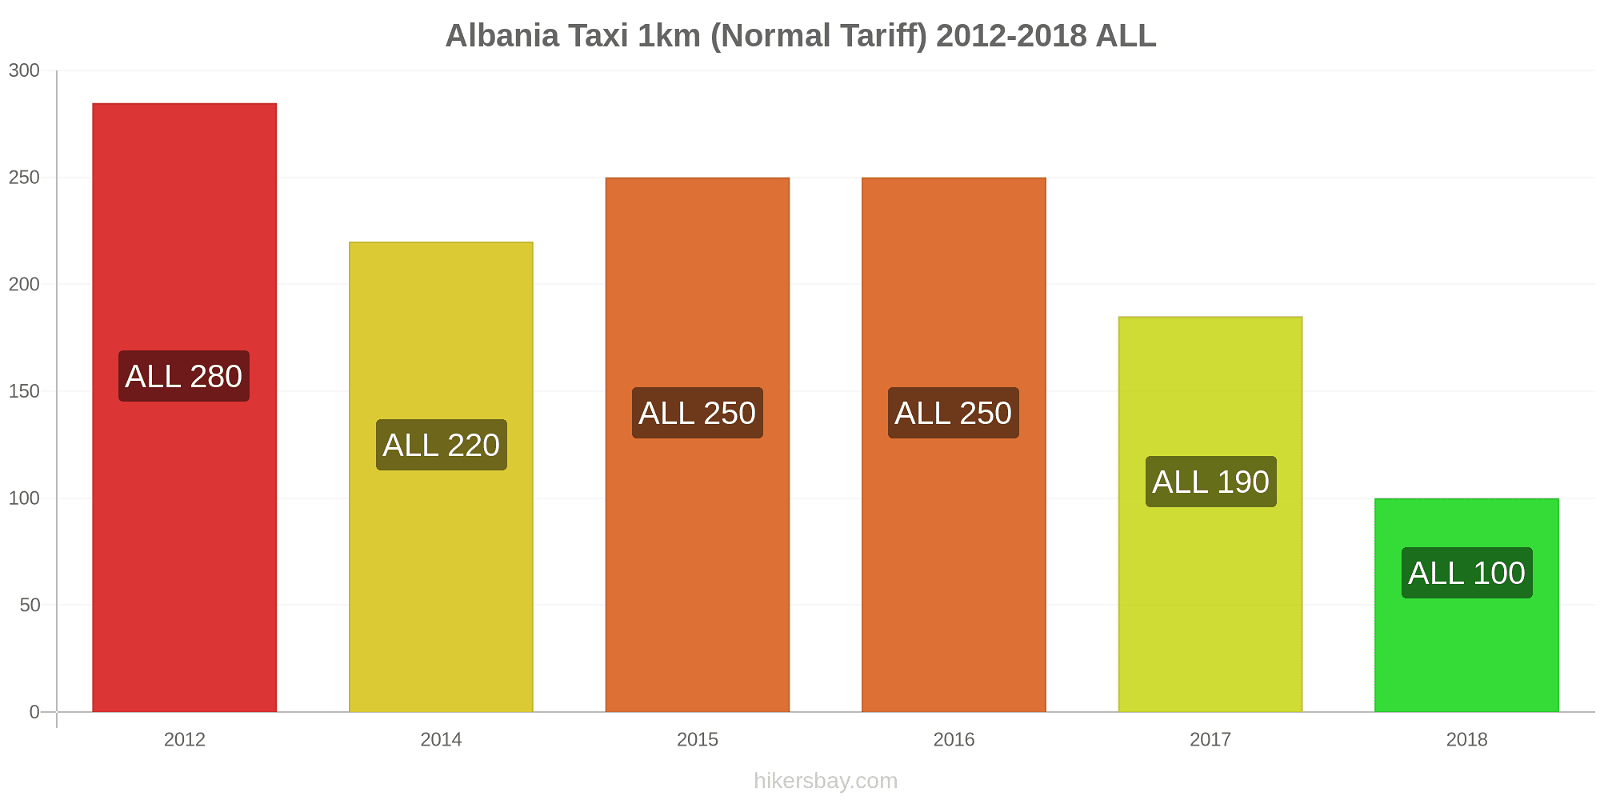 Albania price changes Taxi 1km (Normal Tariff) hikersbay.com